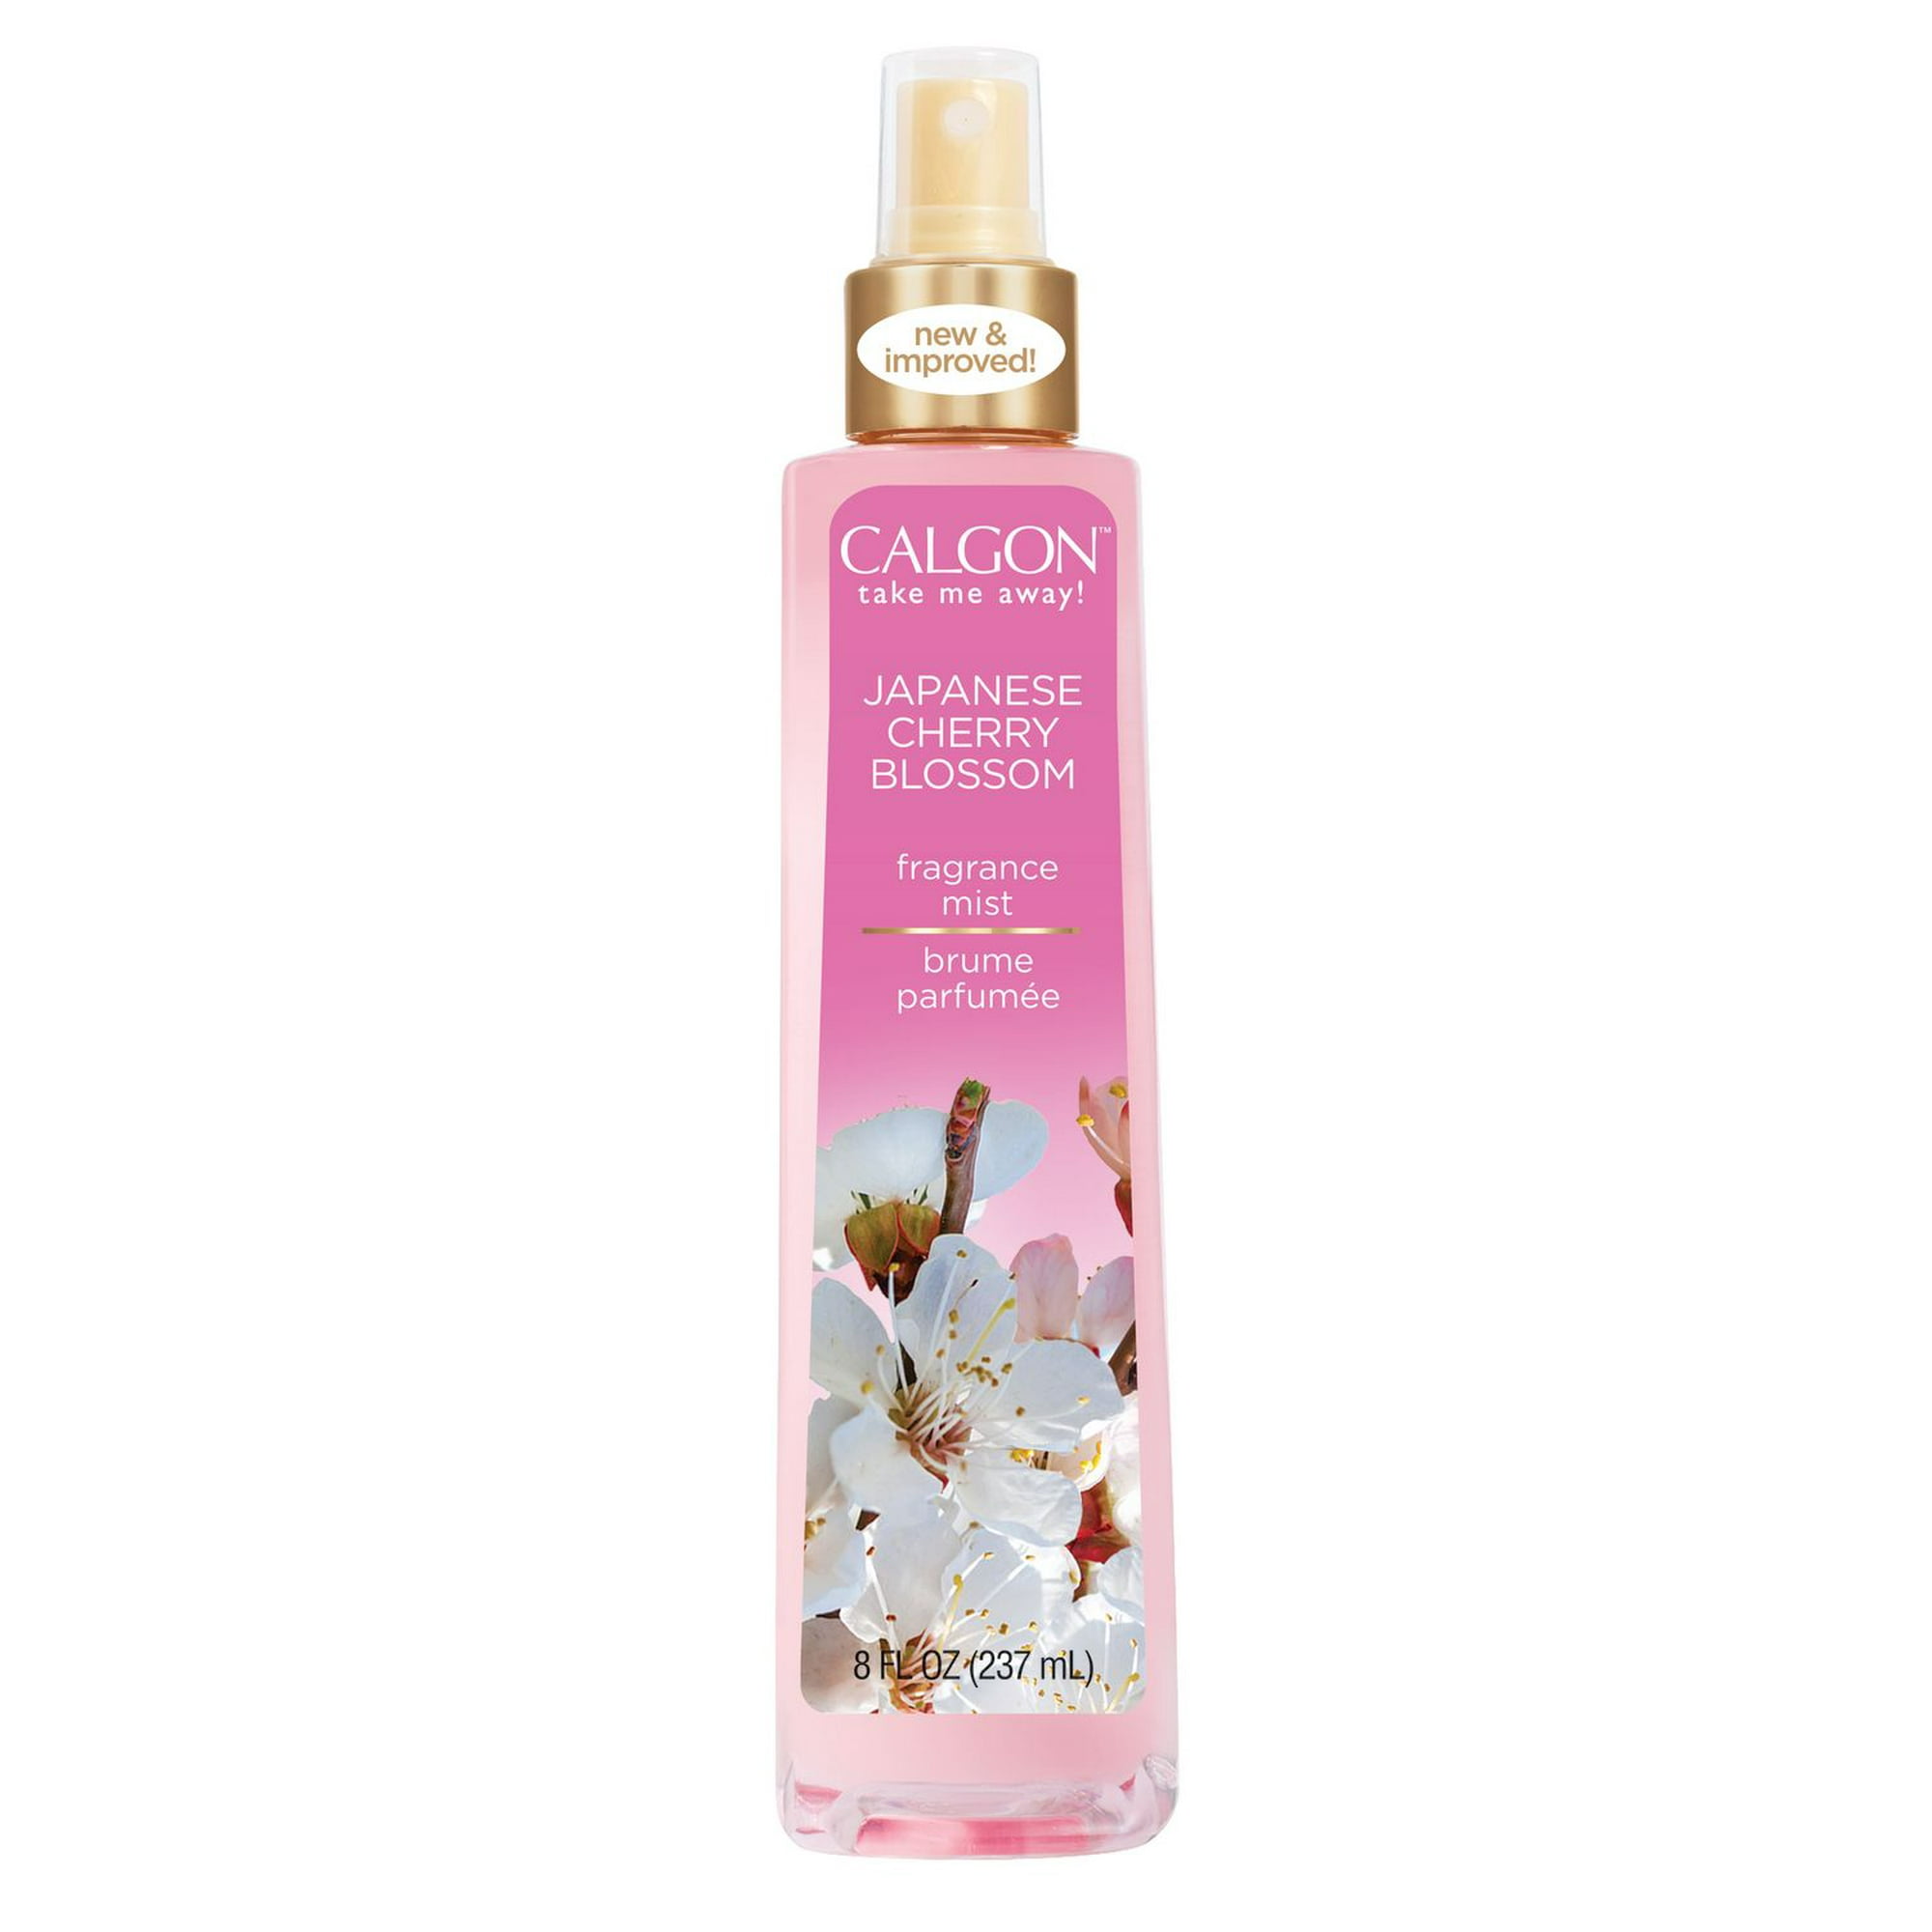 Calgon Japanese Cherry Blossom Fragrance Body Mist